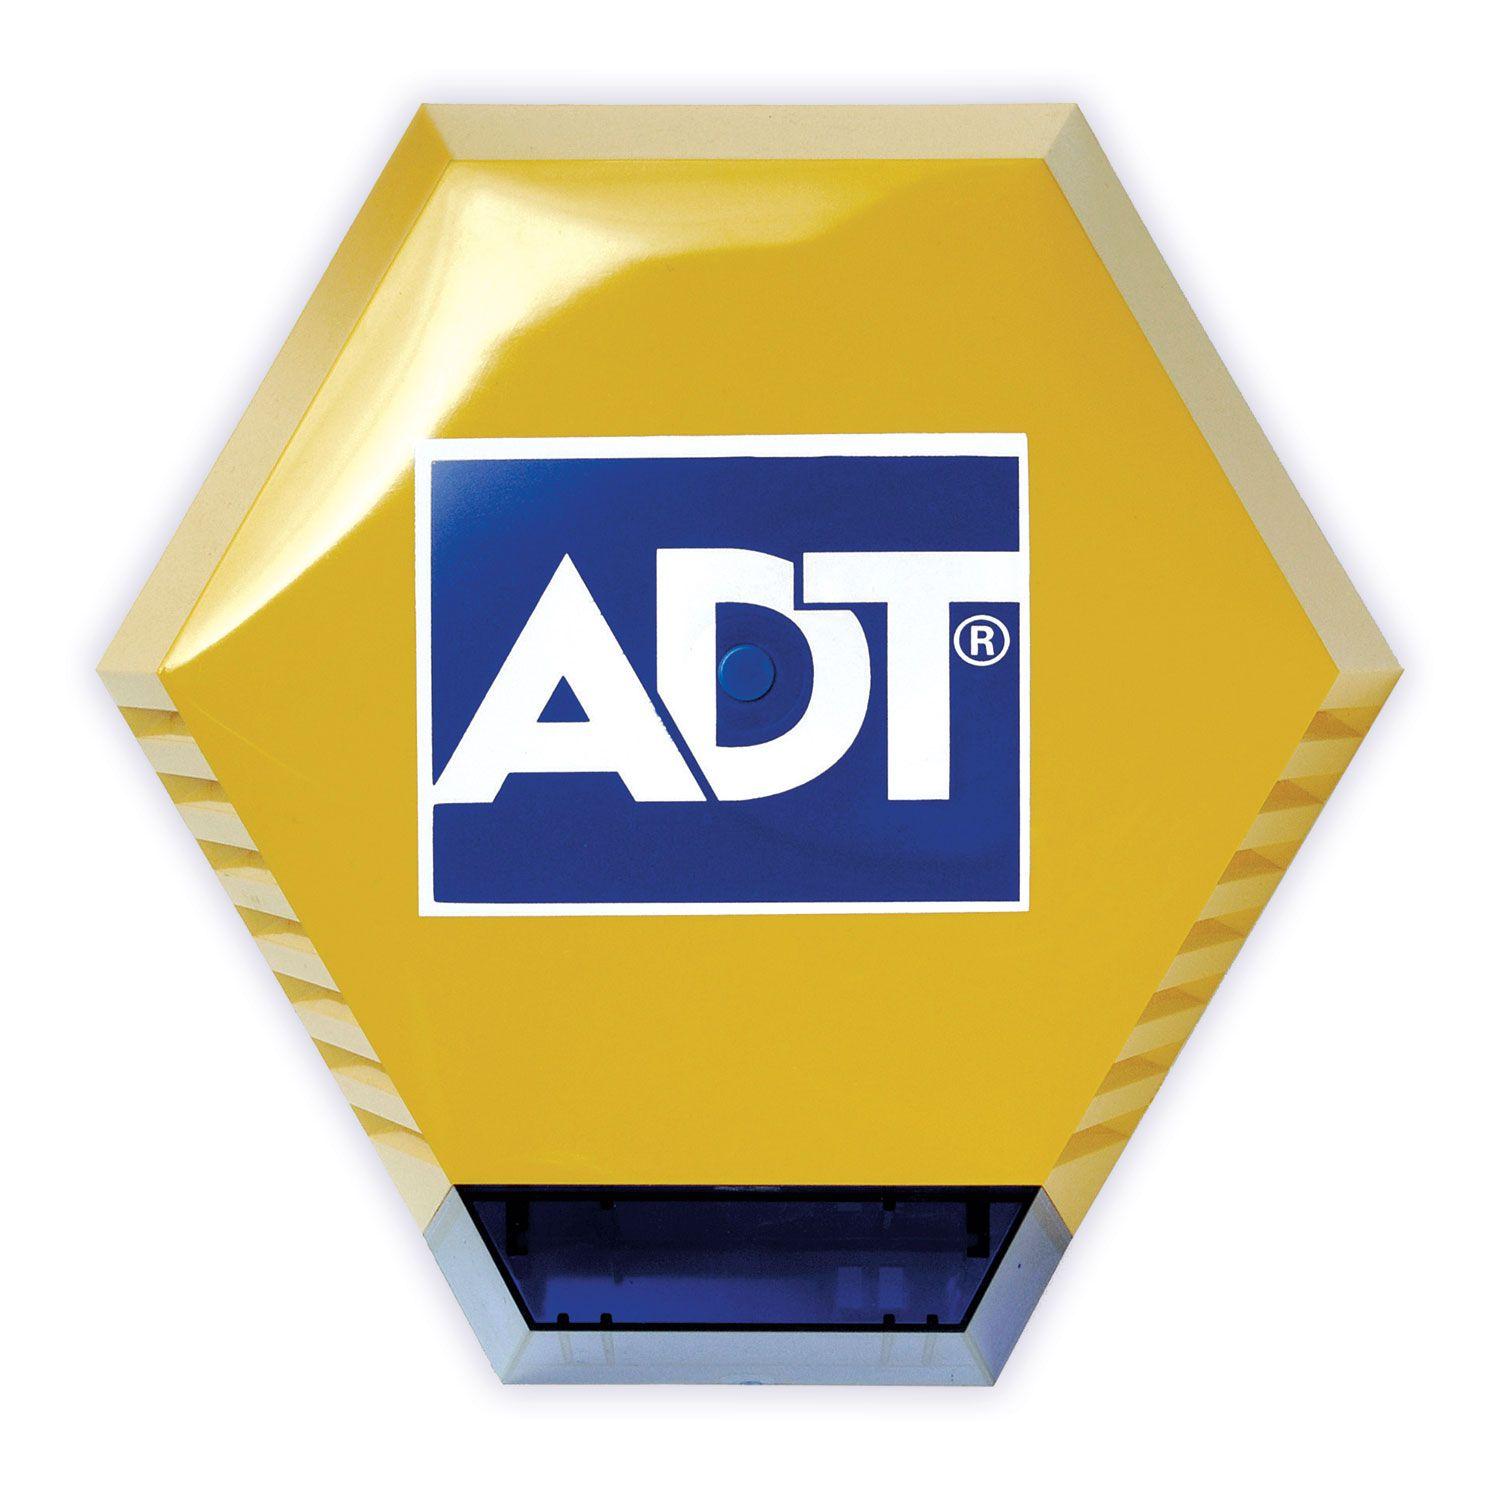 ADT Logo - ADT Home & Business Security - UK Burglar Alarm Systems | ADT